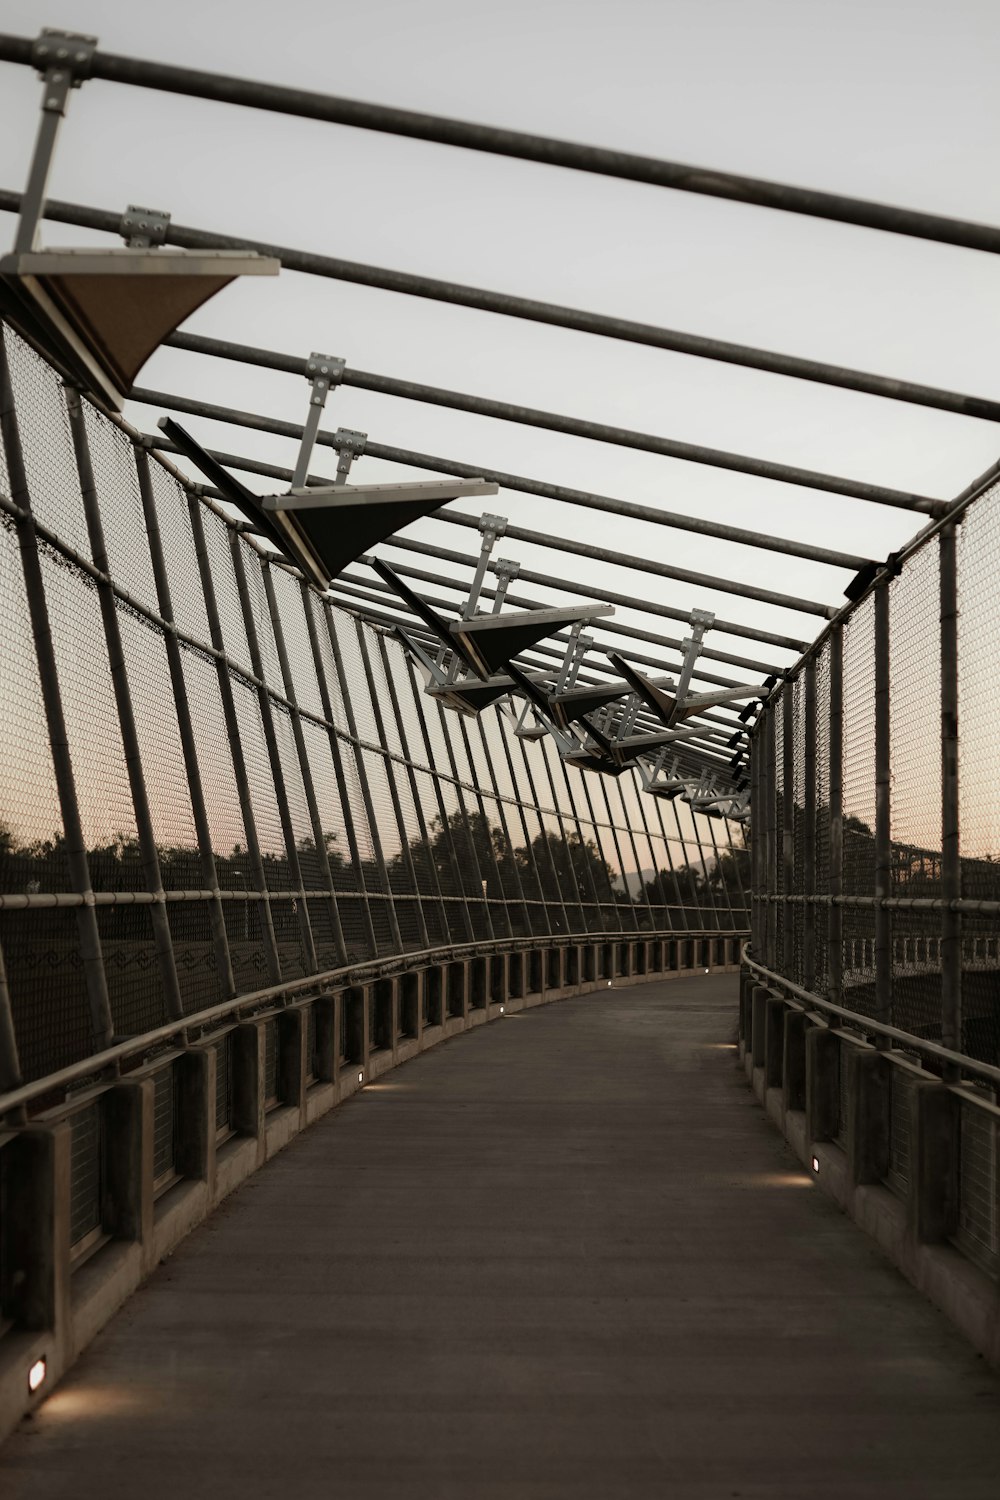 a bridge with a metal frame